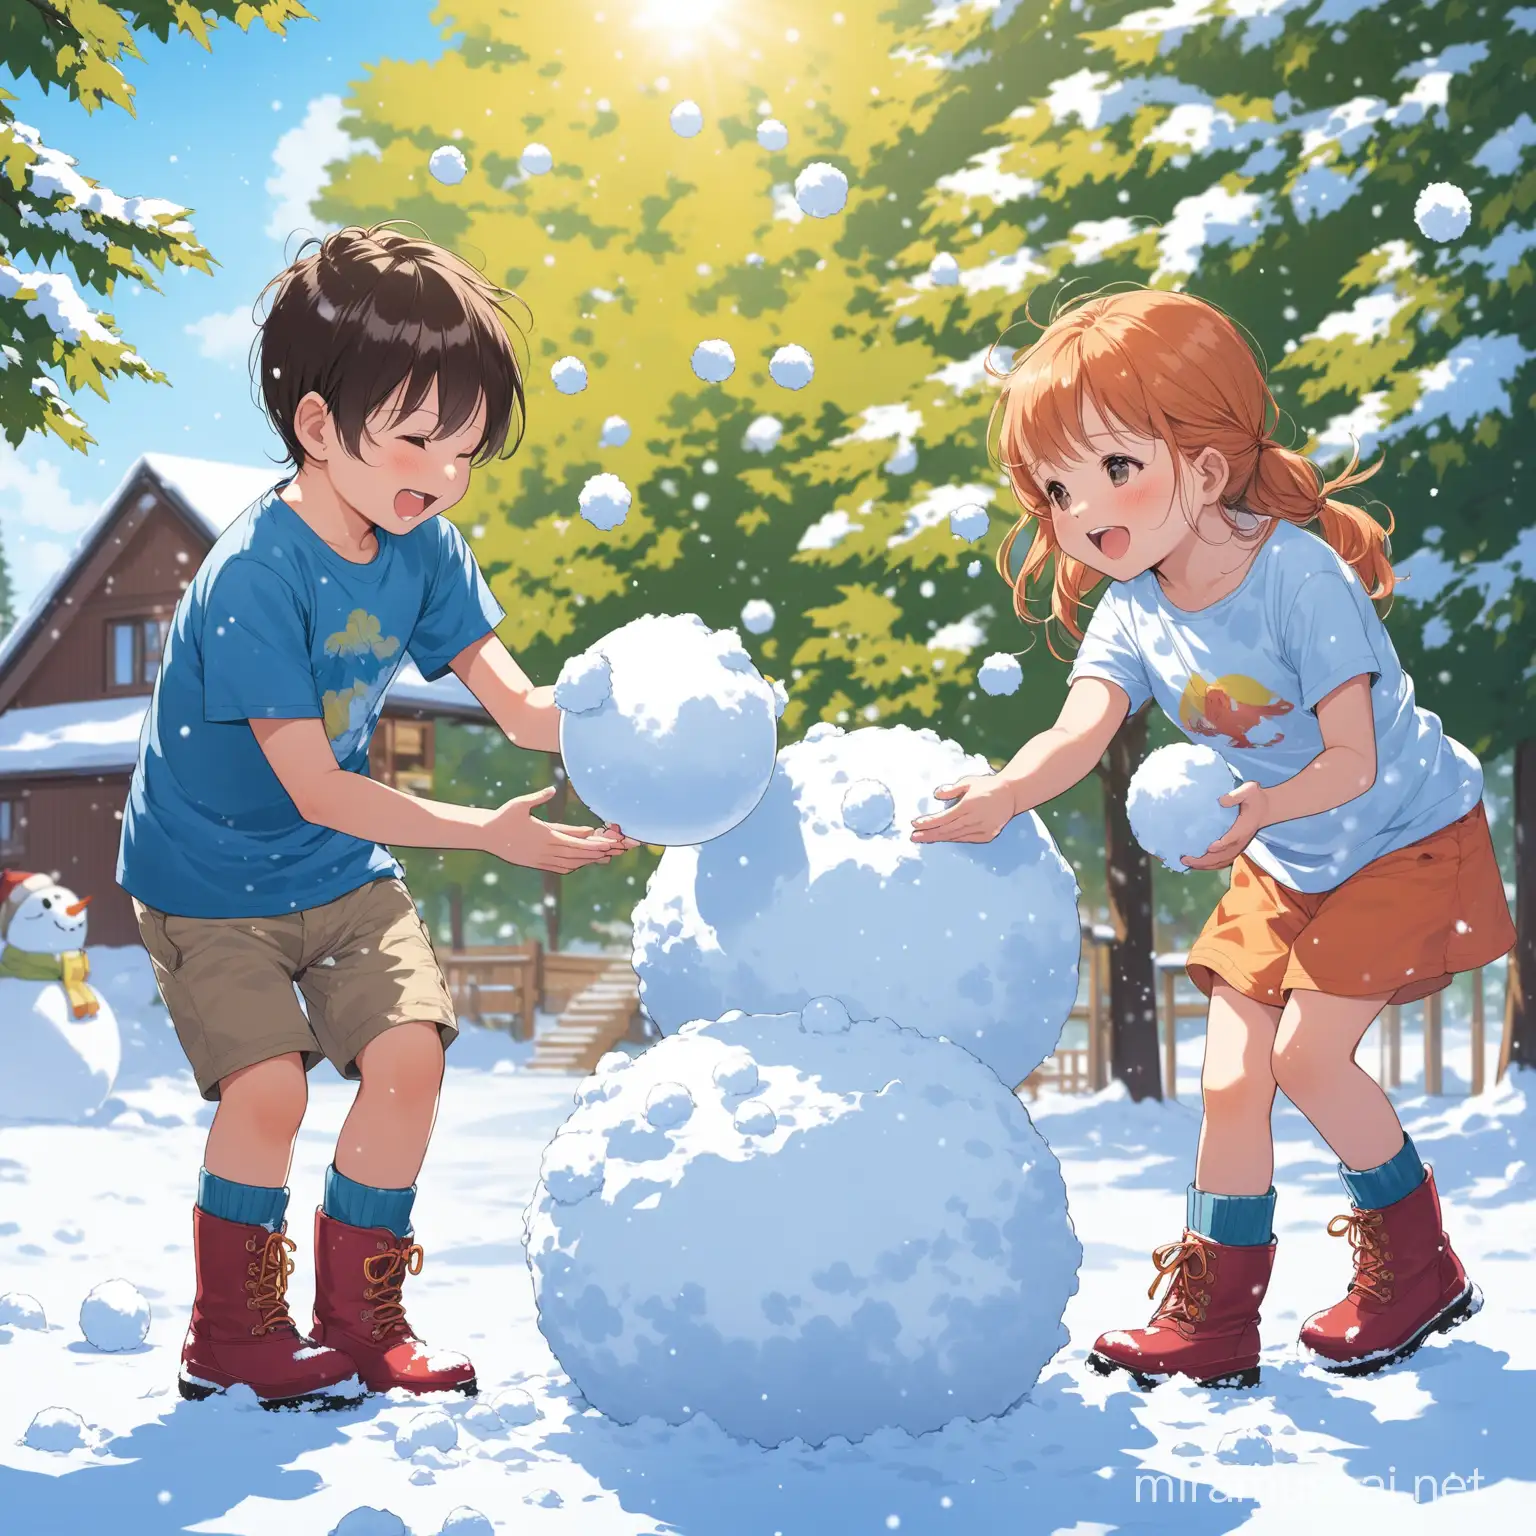 Children Enjoying Snowball Fun in Summer Attire